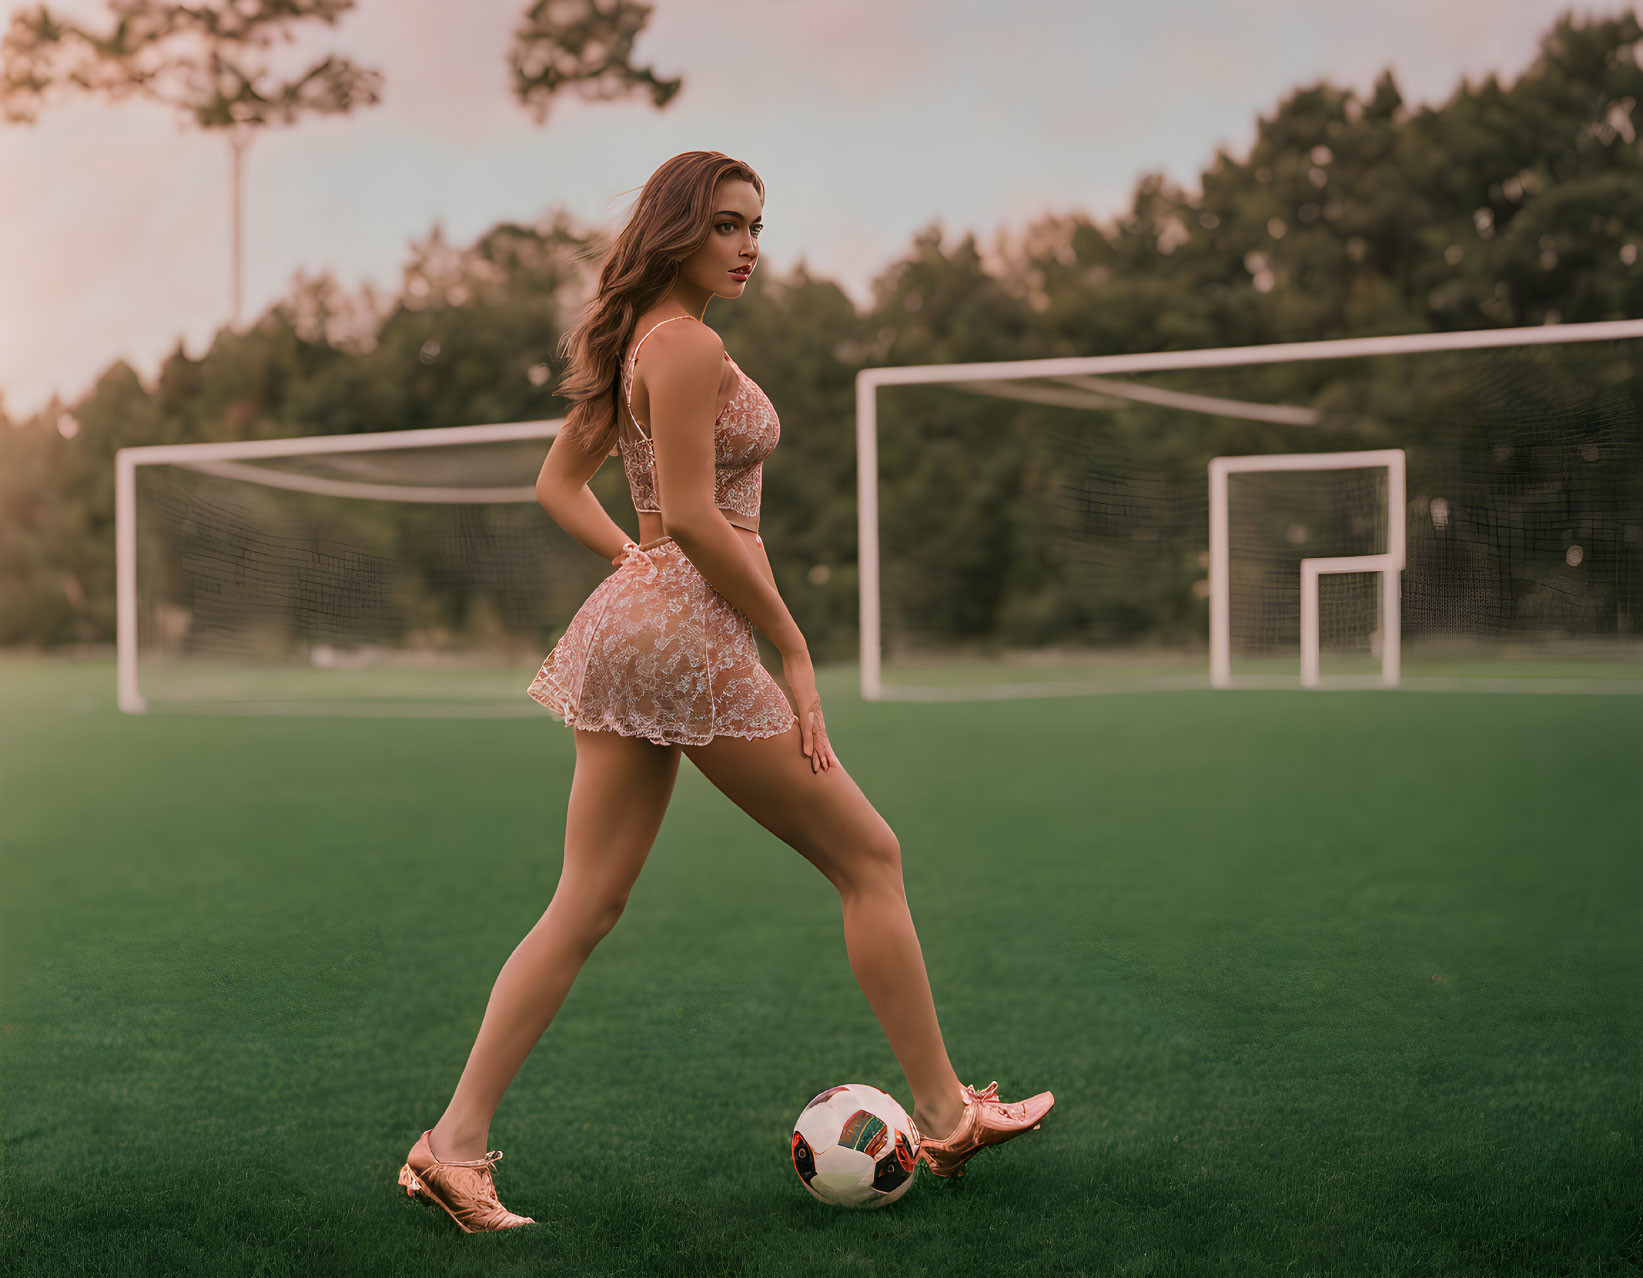 A beautiful girl playing soccer